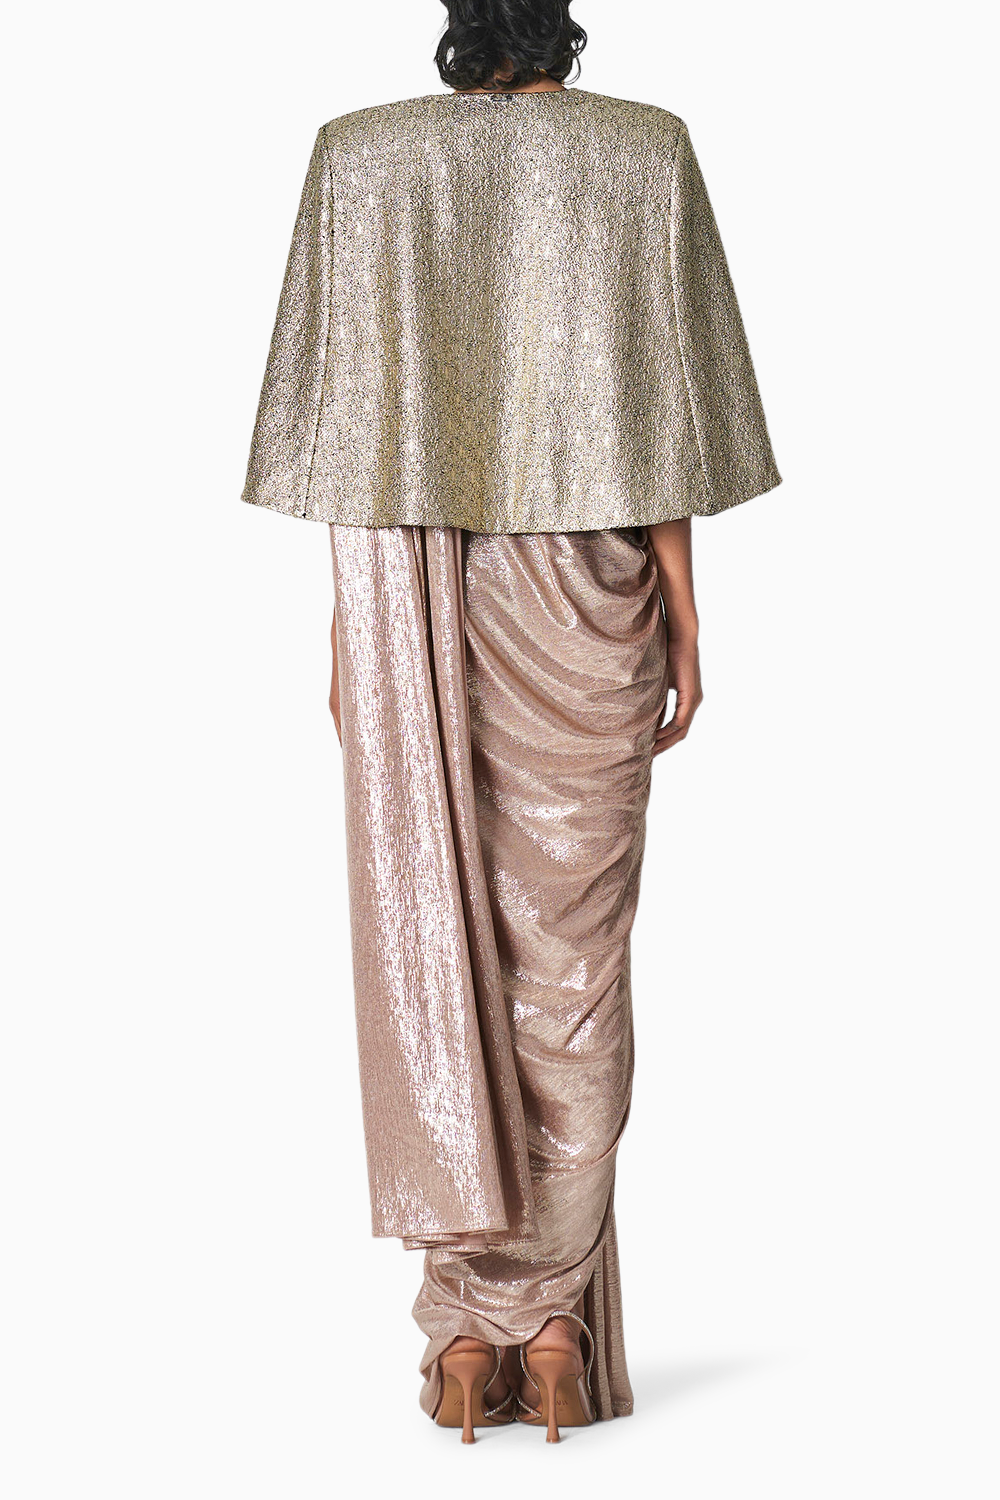 Shea Sari with Pebble Cape